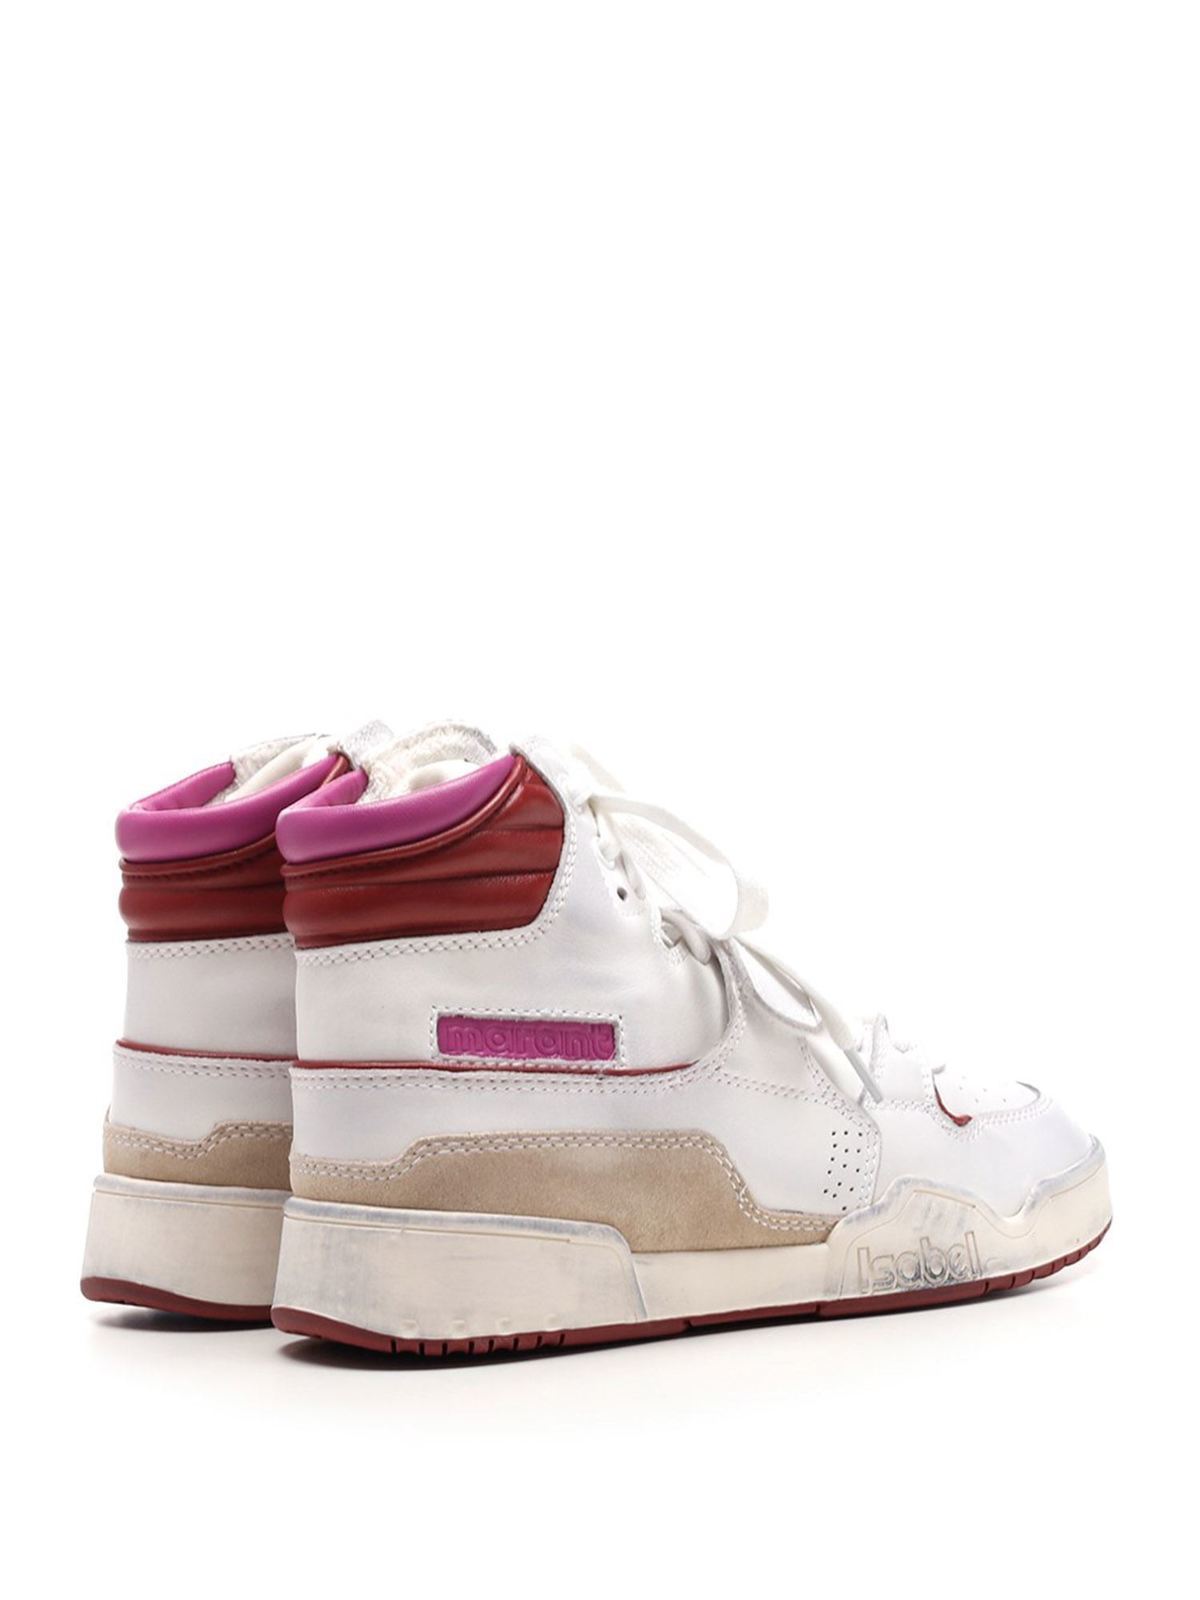 Vent et øjeblik sig selv Sprællemand Trainers Isabel Marant - High sneakers in burgundy and pink -  BK026621P031S80BY